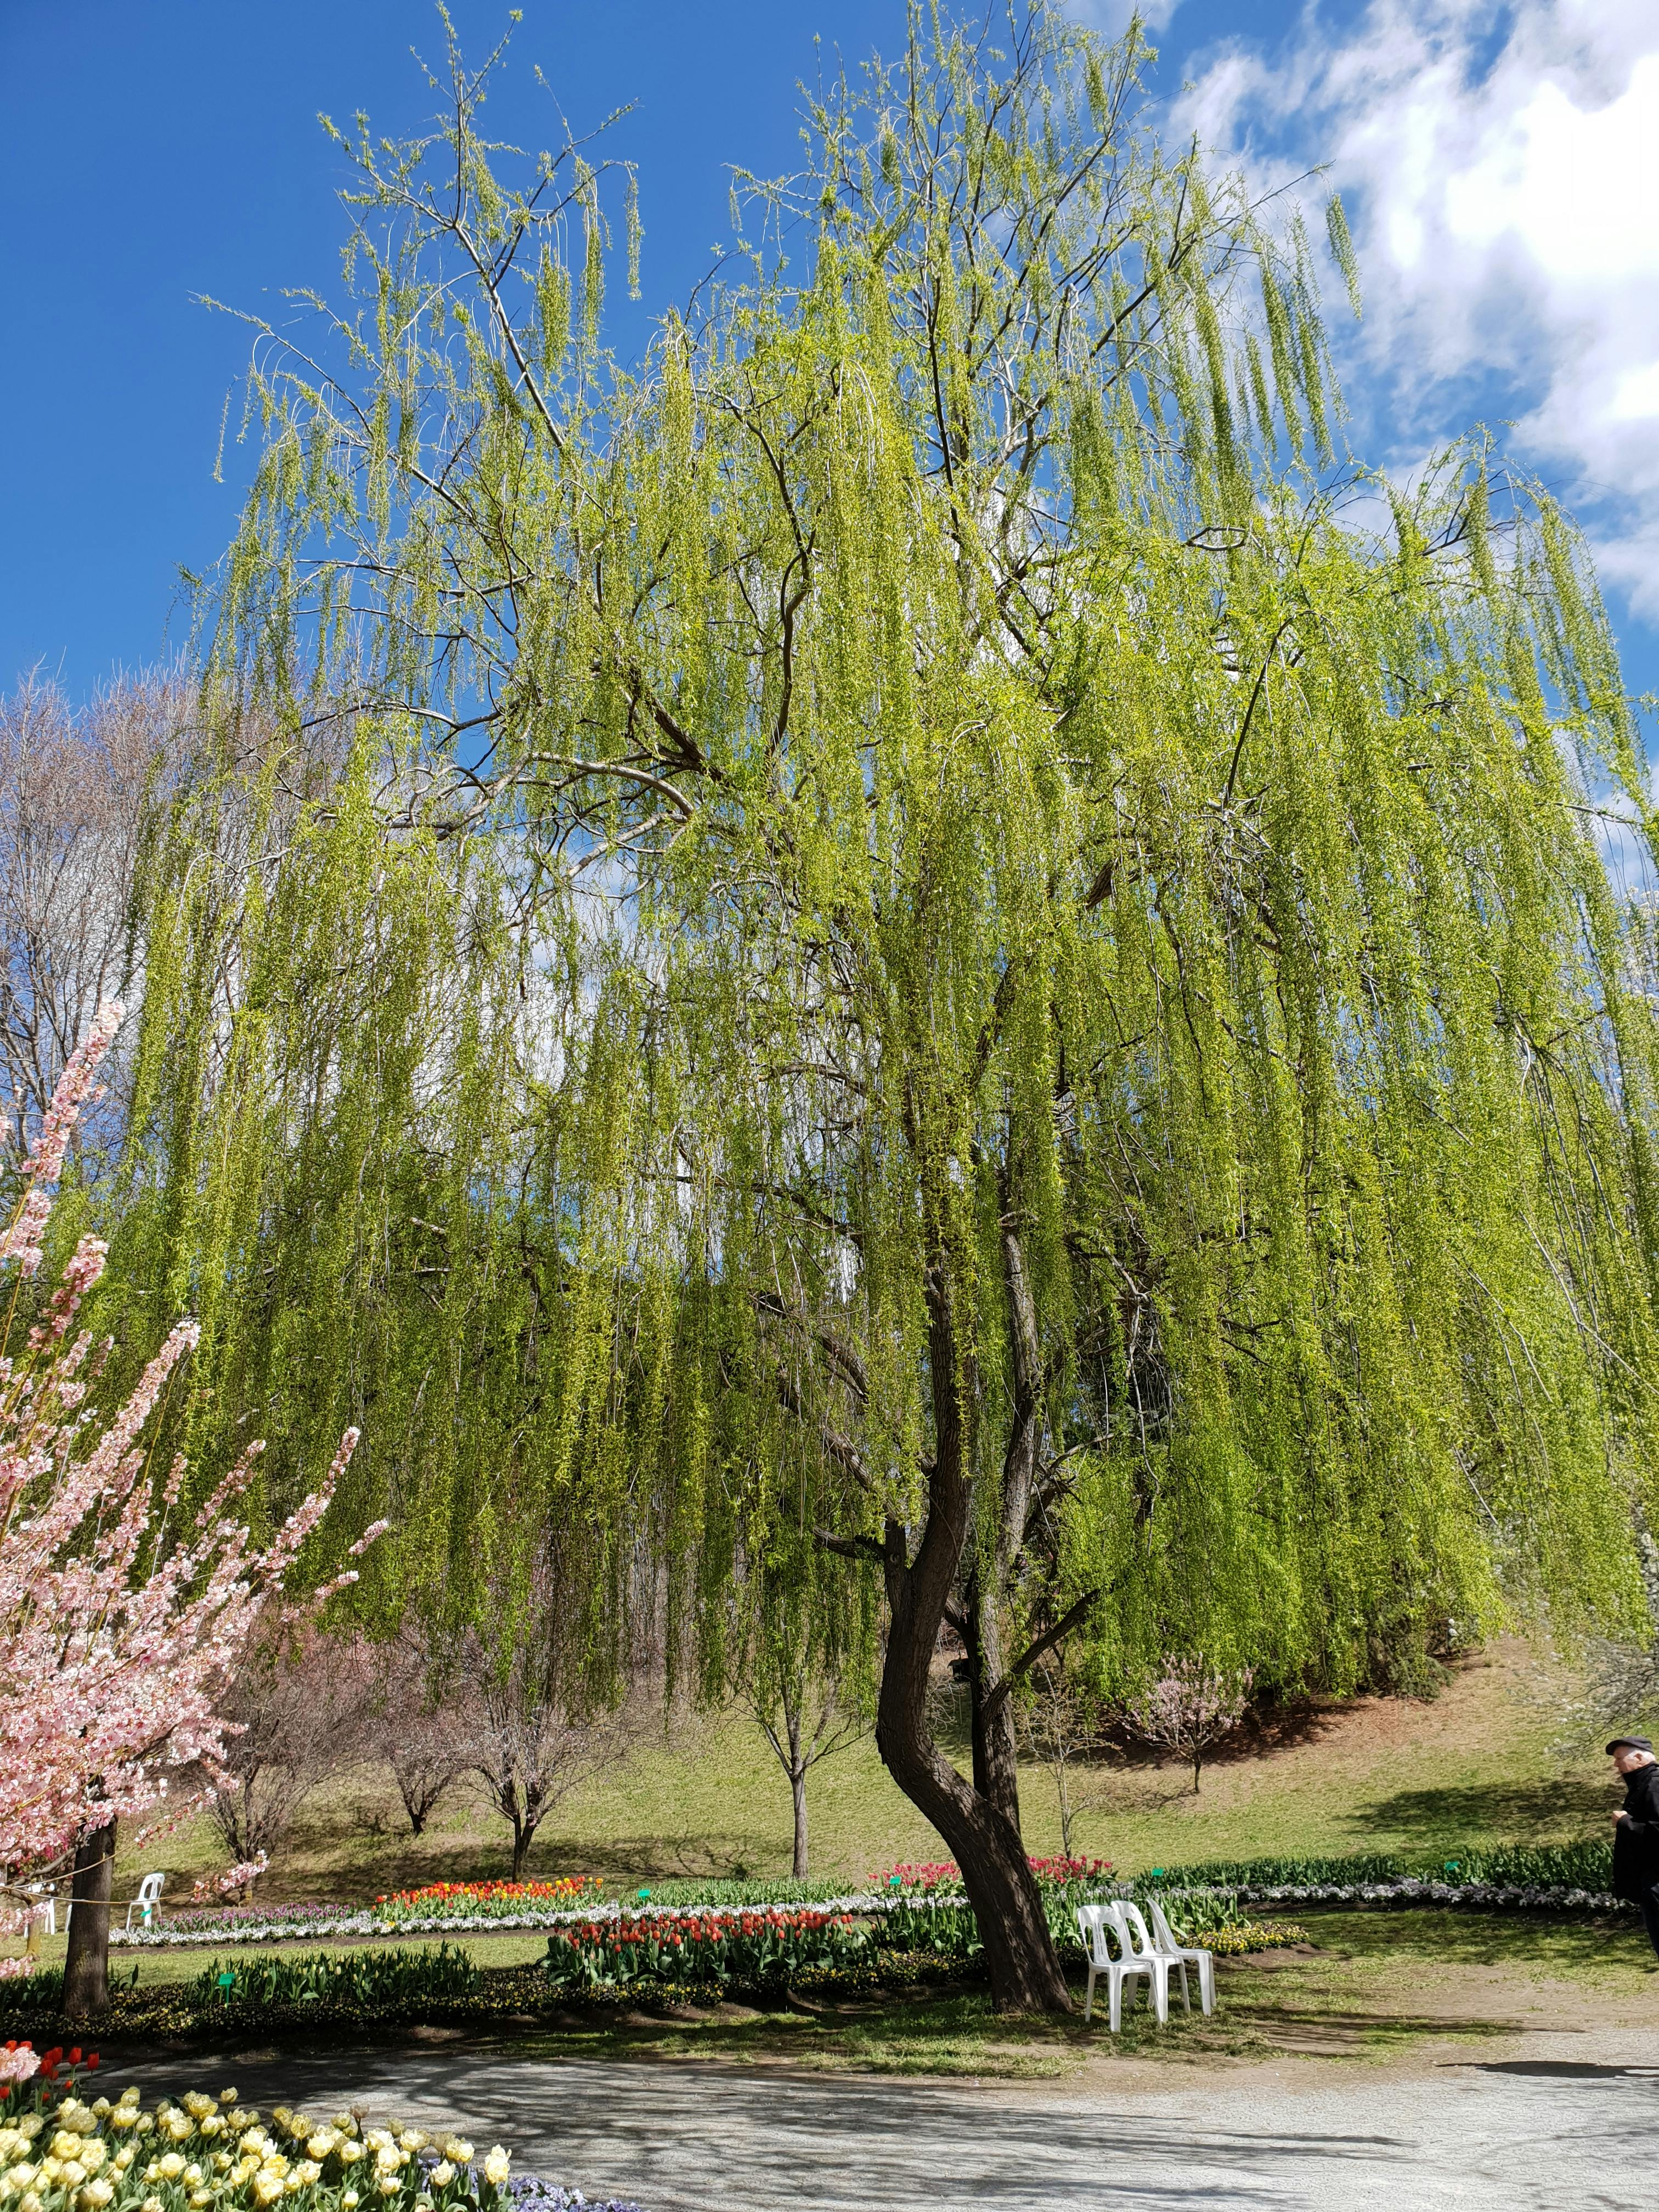 Free stock photo of tree, Willow, willow tree